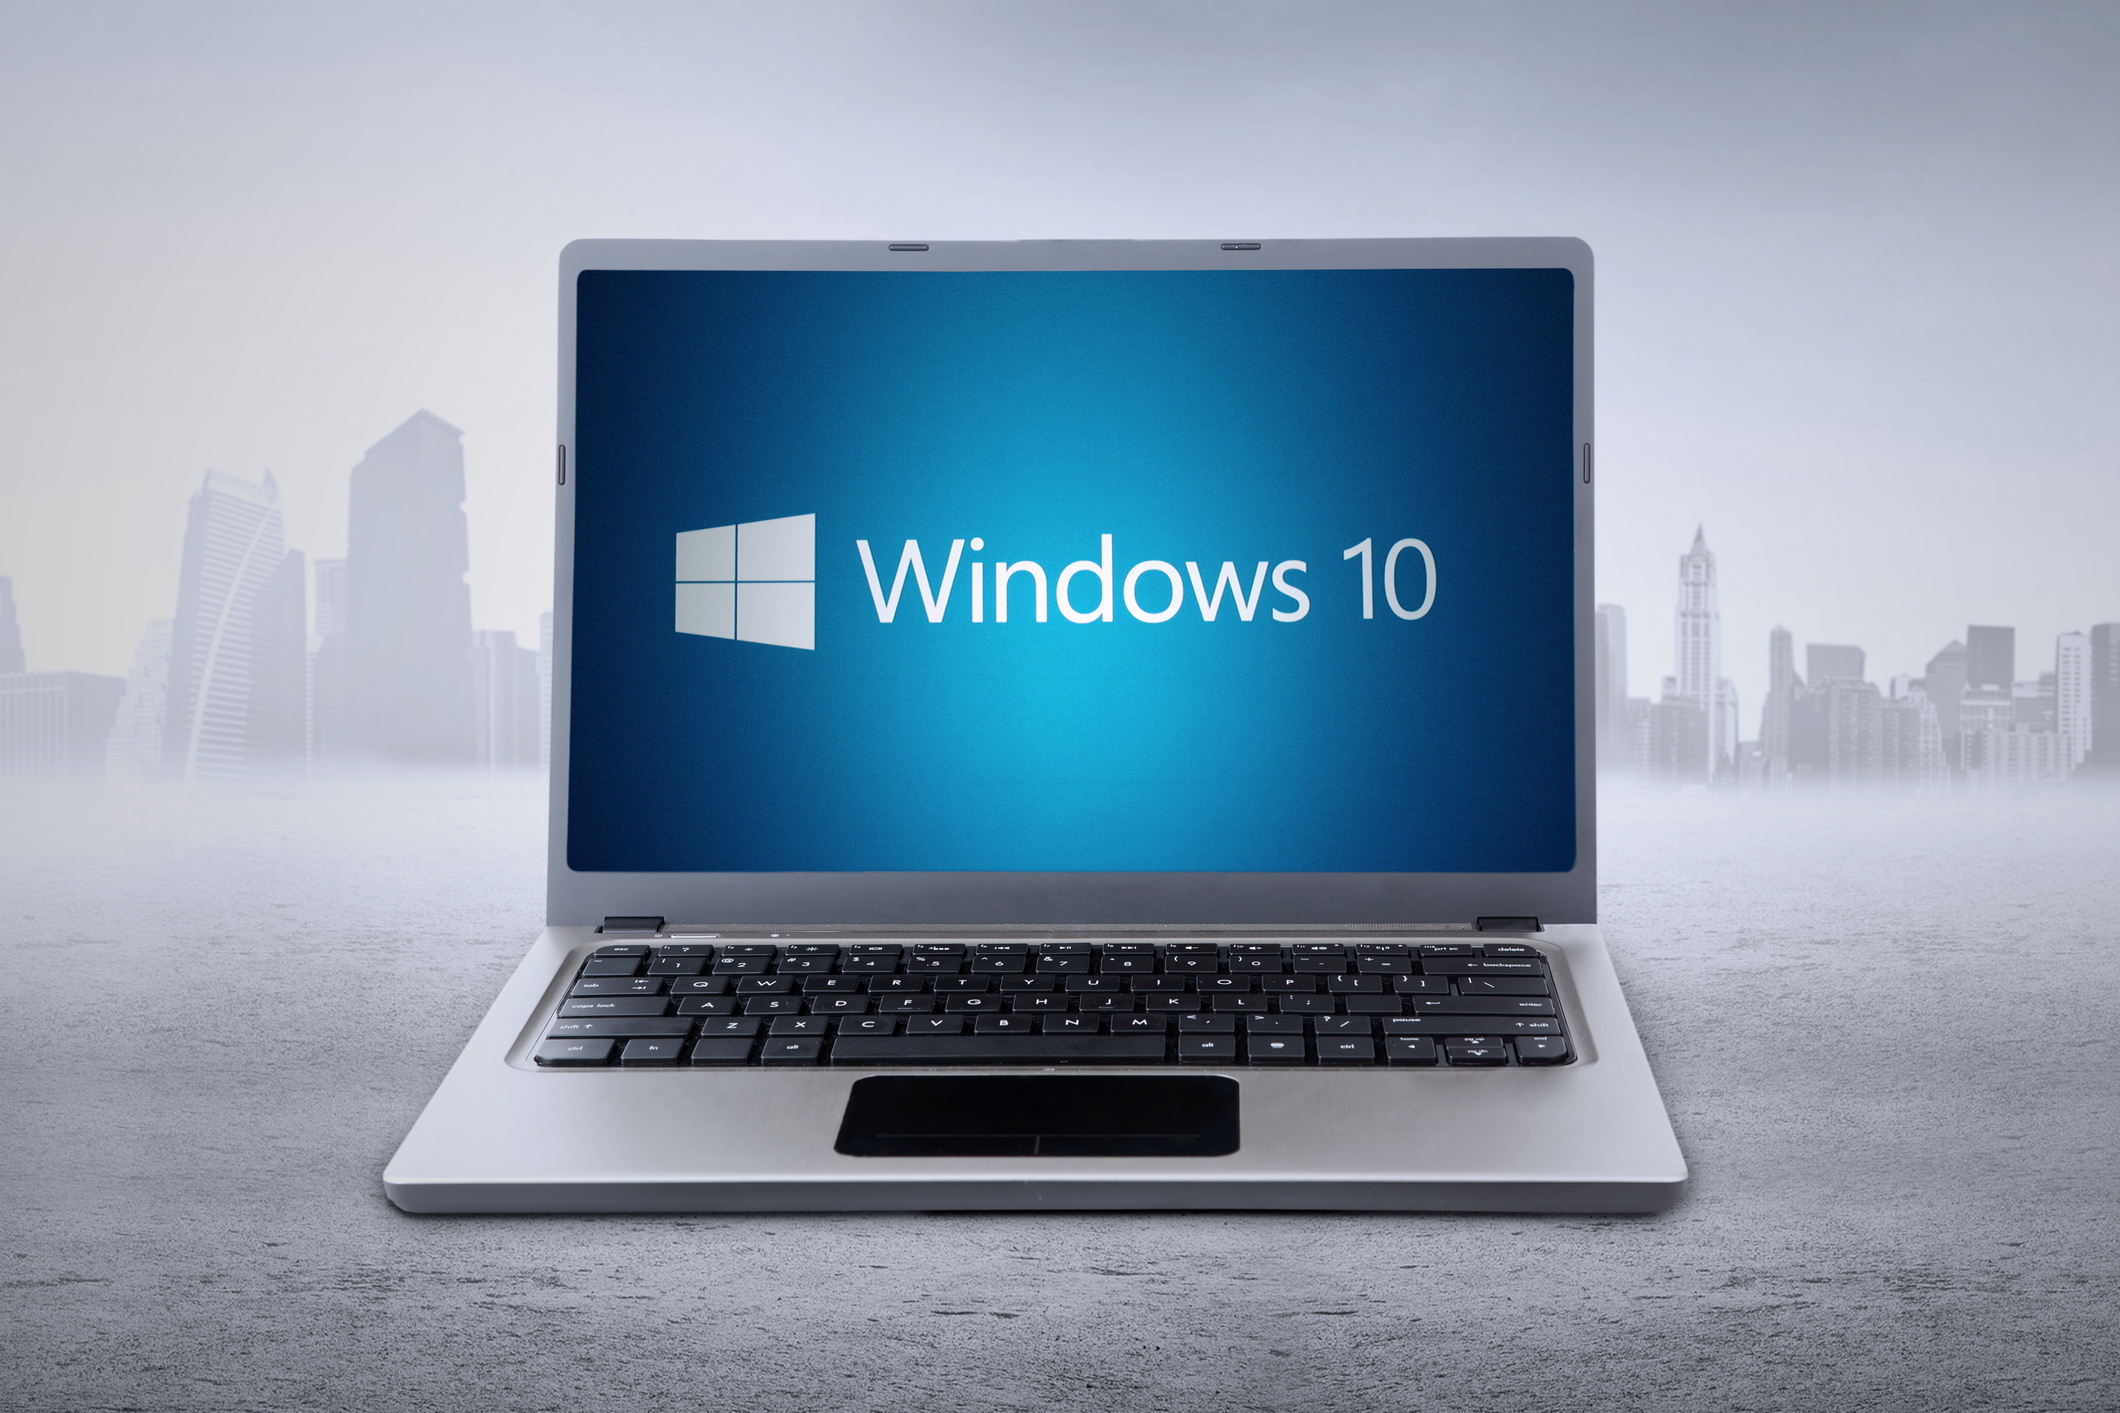 Windows 10 pirate downloads hide money-stealing malware